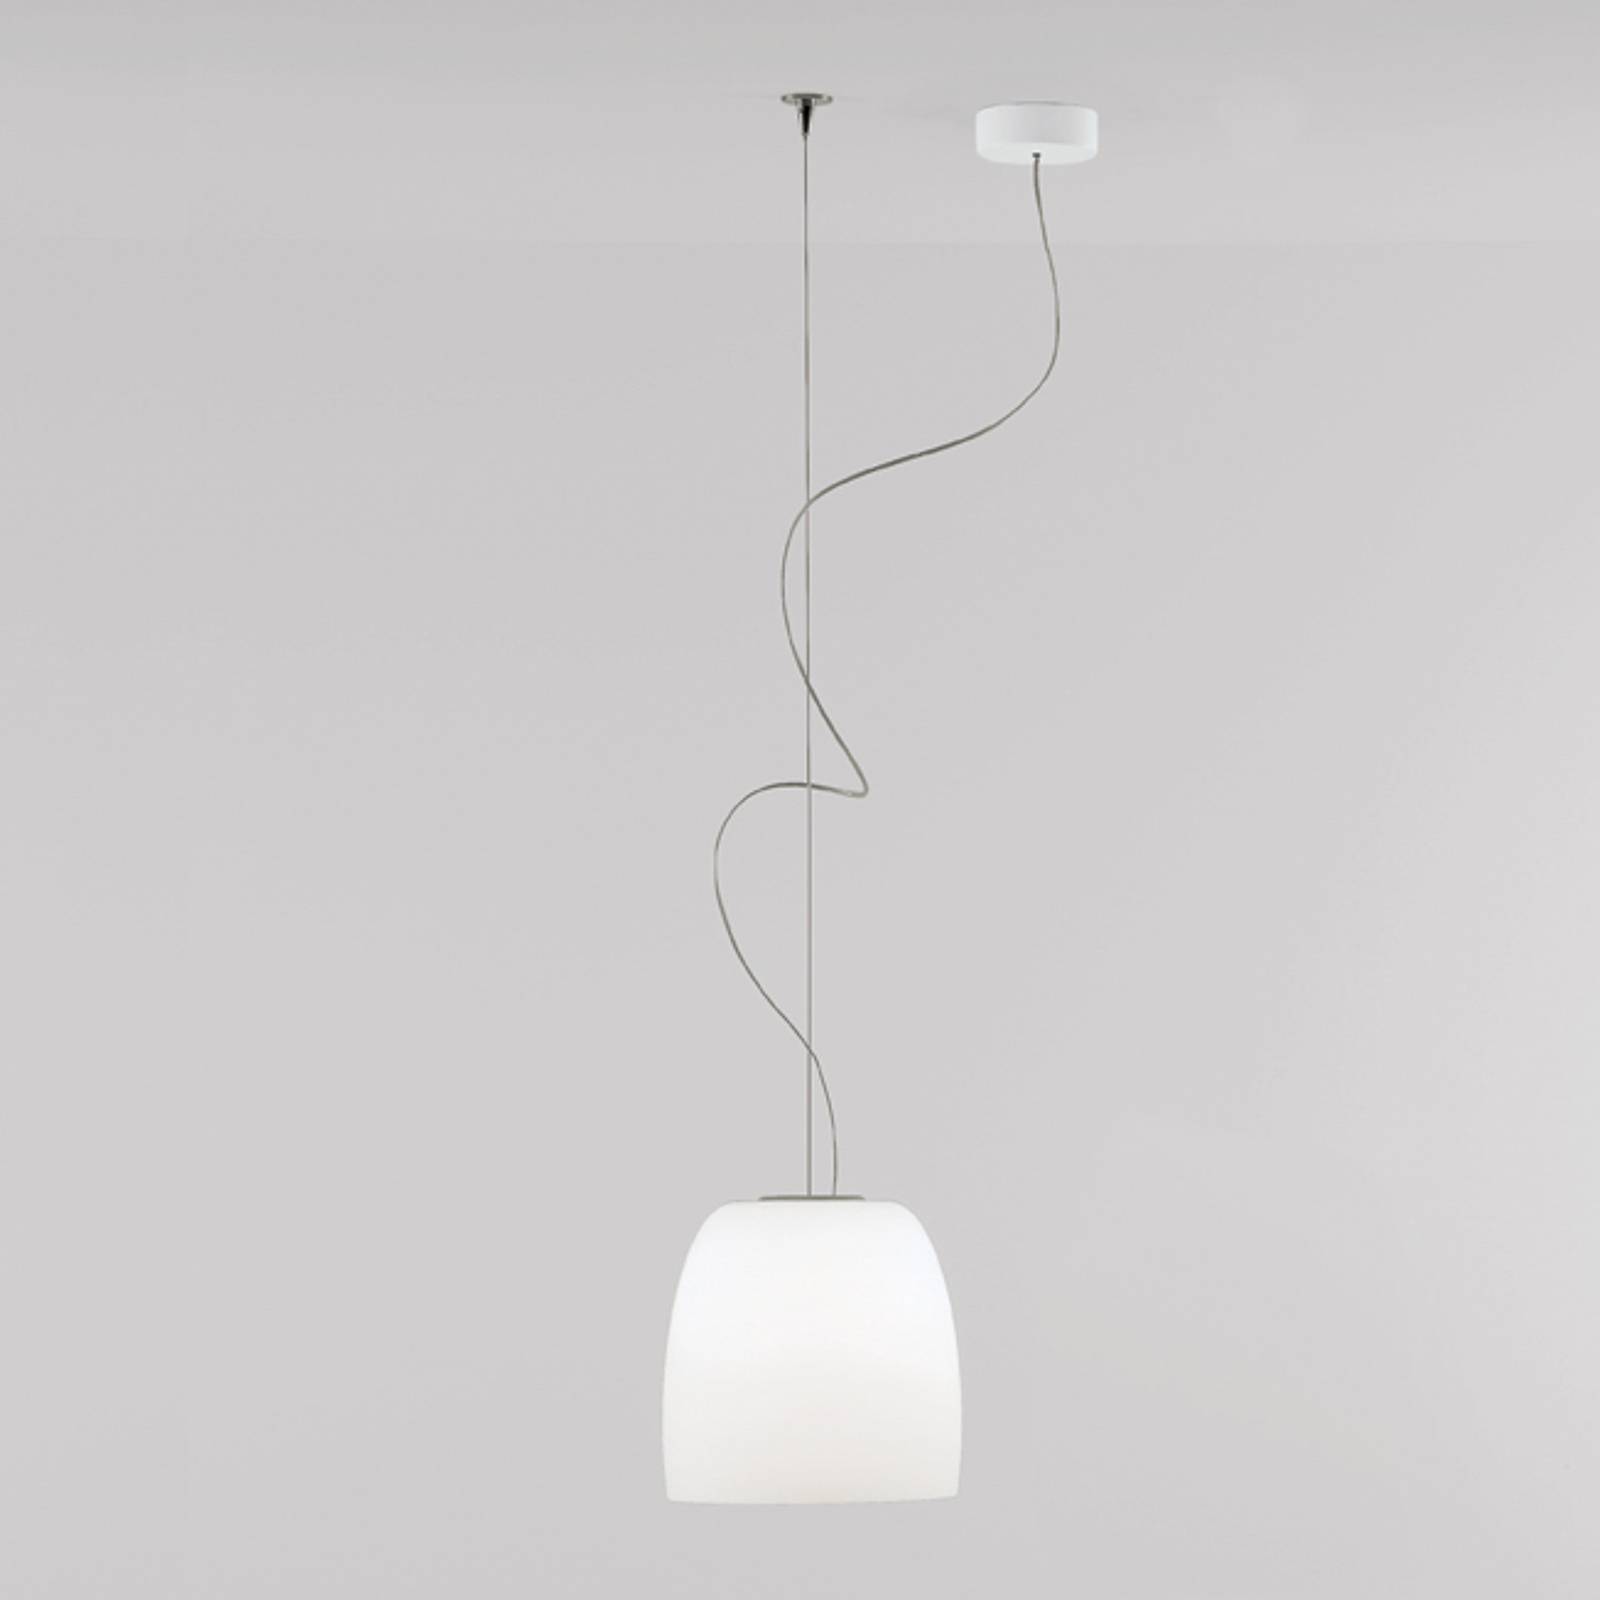 Prandina Notte S5 lampa wisząca, biała opalowa